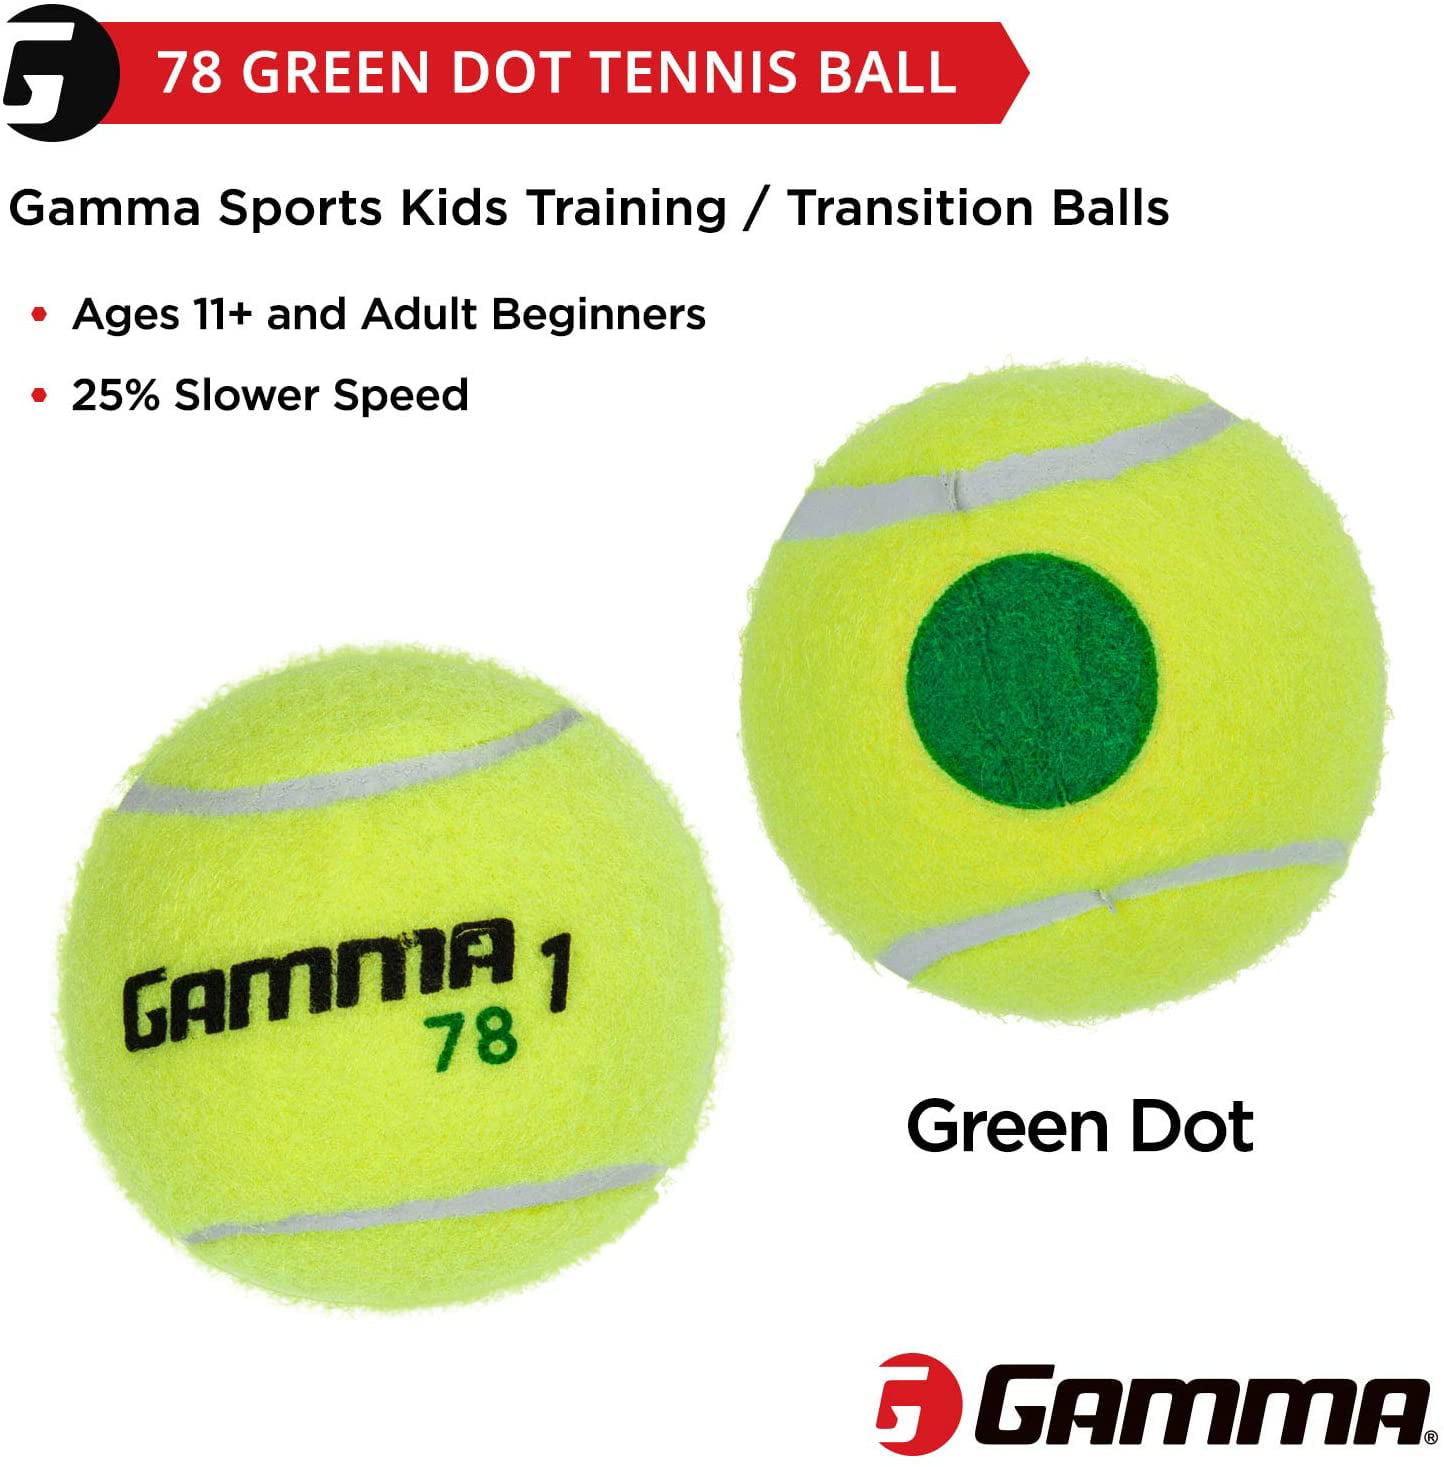 25%-50% Slower Ball Speed - 12 Practice Tennis Balls: Orange 60 or Green 78 Dot 36 48 Transition 60 Pack Sizes Gamma Beginner Child or Adult Training 